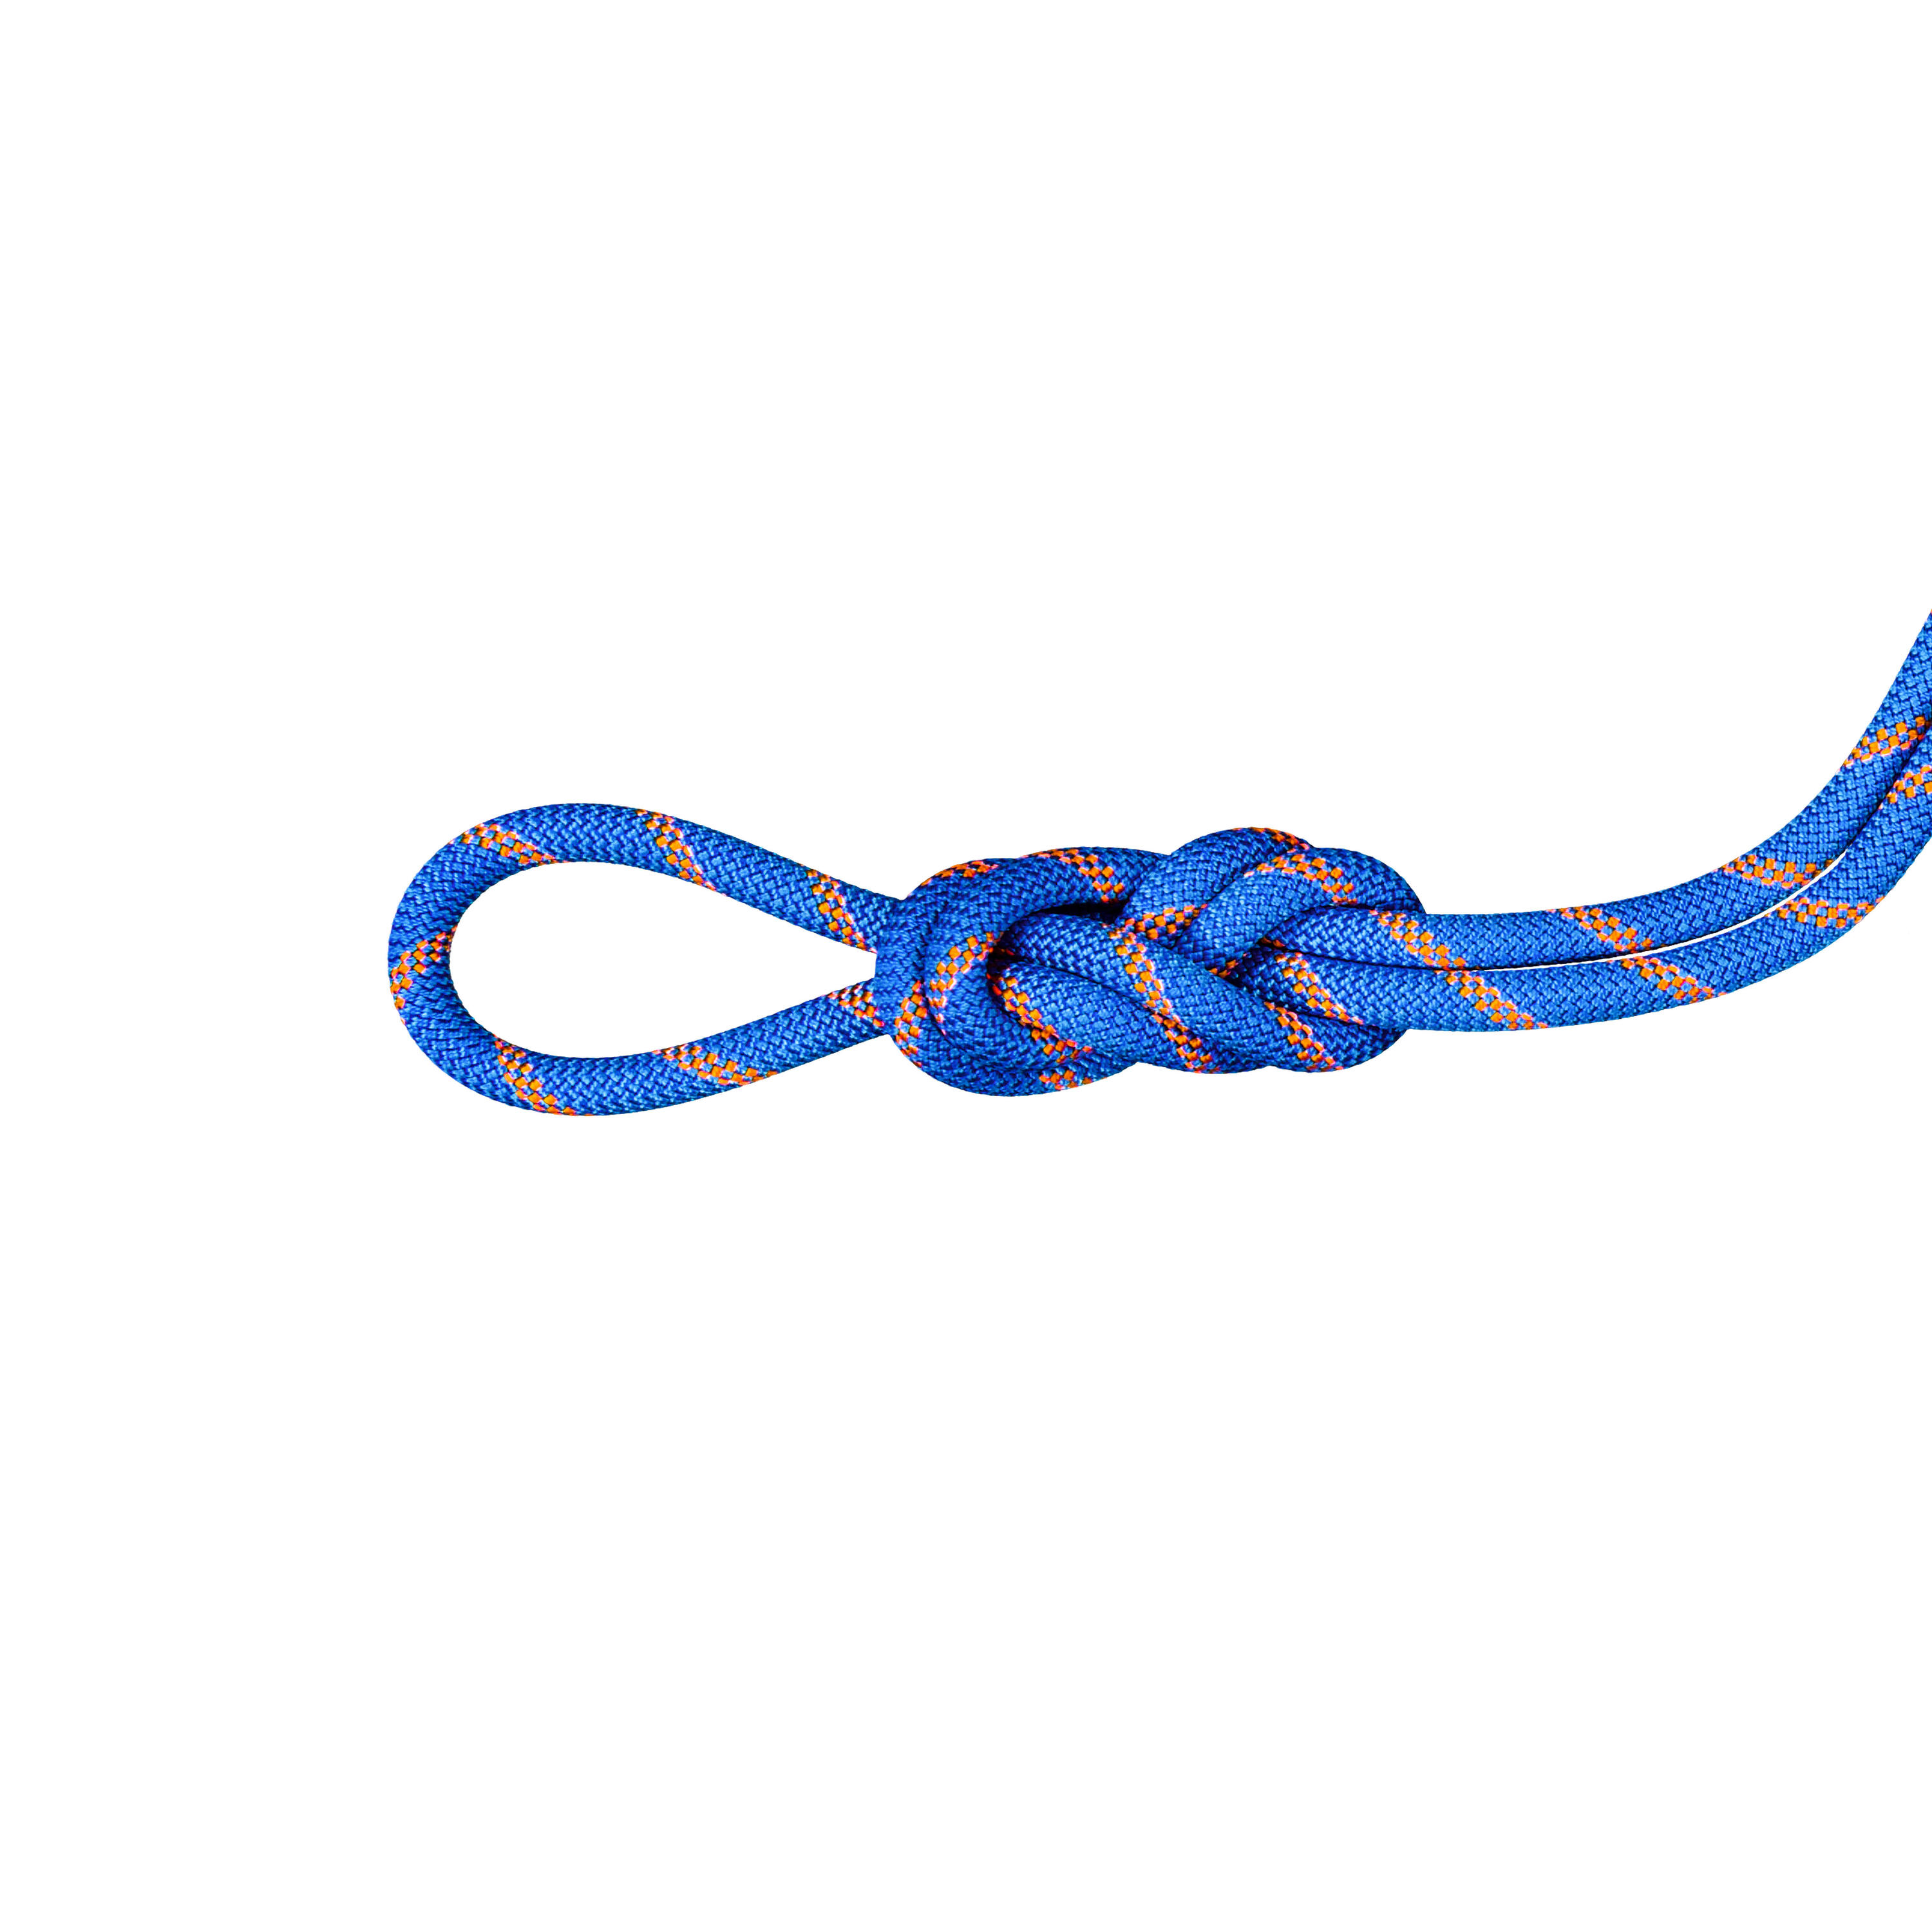 MAMMUT Alpine Sender Dry Triple-Rated Rope 9.0 mm x 40m - Blue